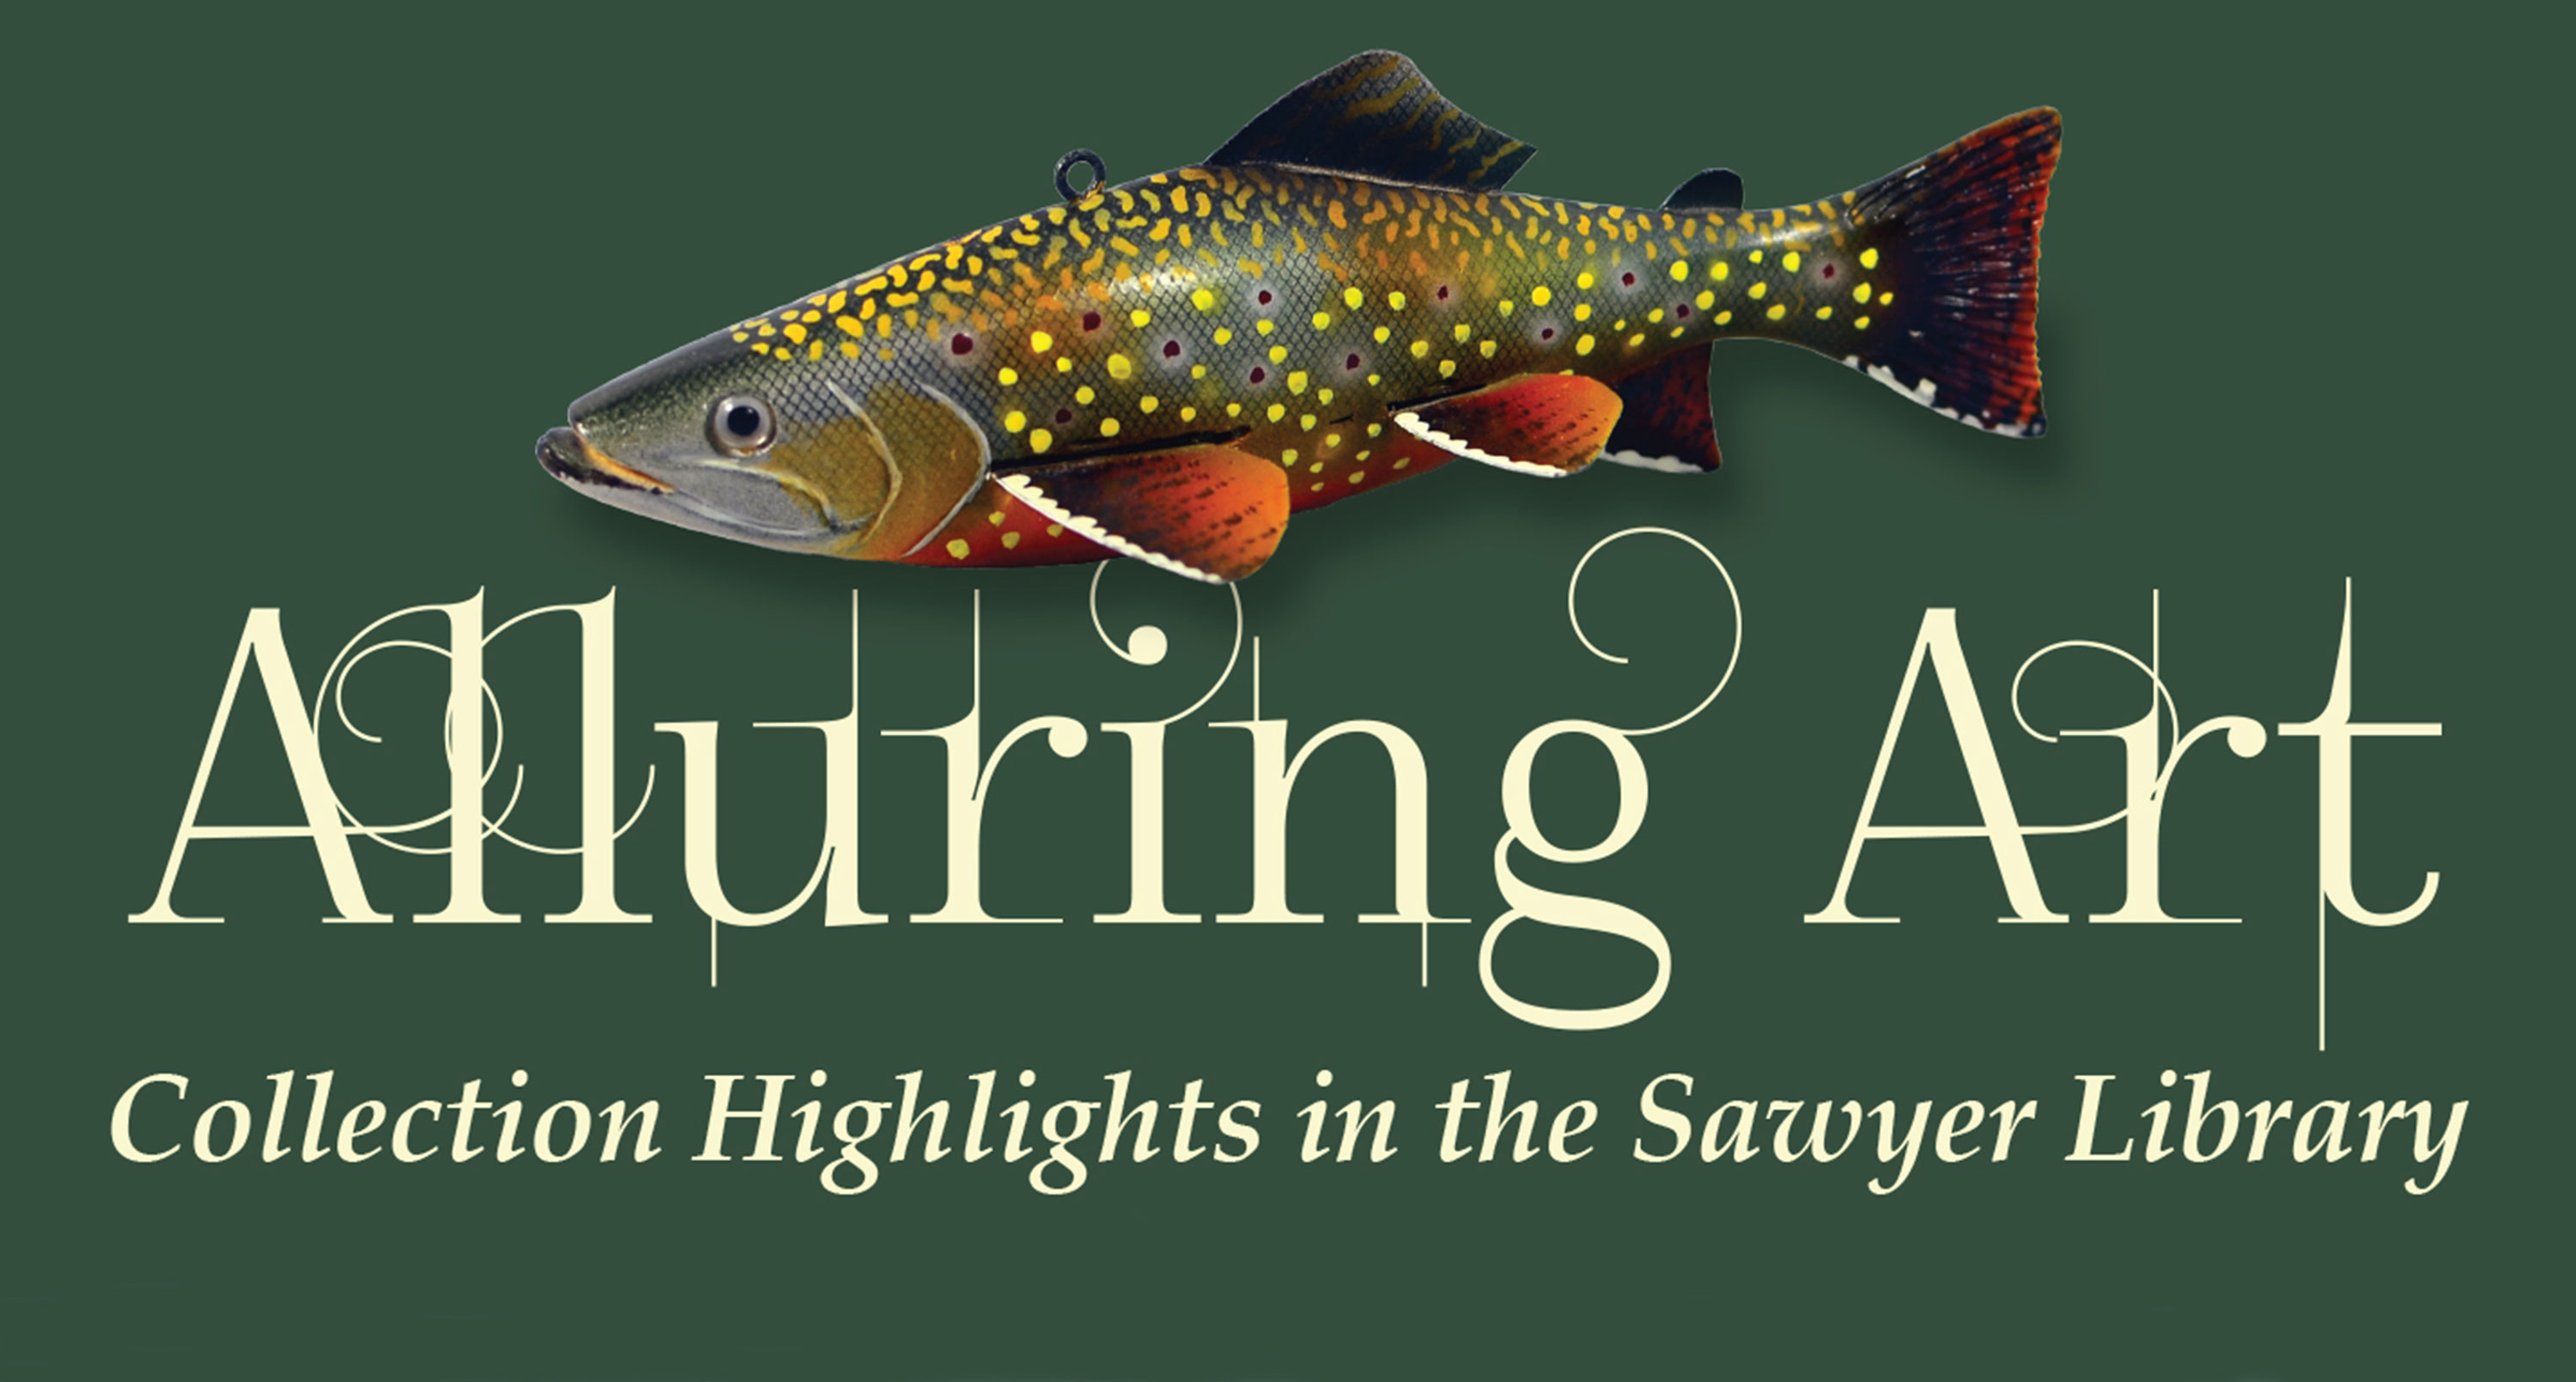 Alluring Art logo featuring a fish decoy